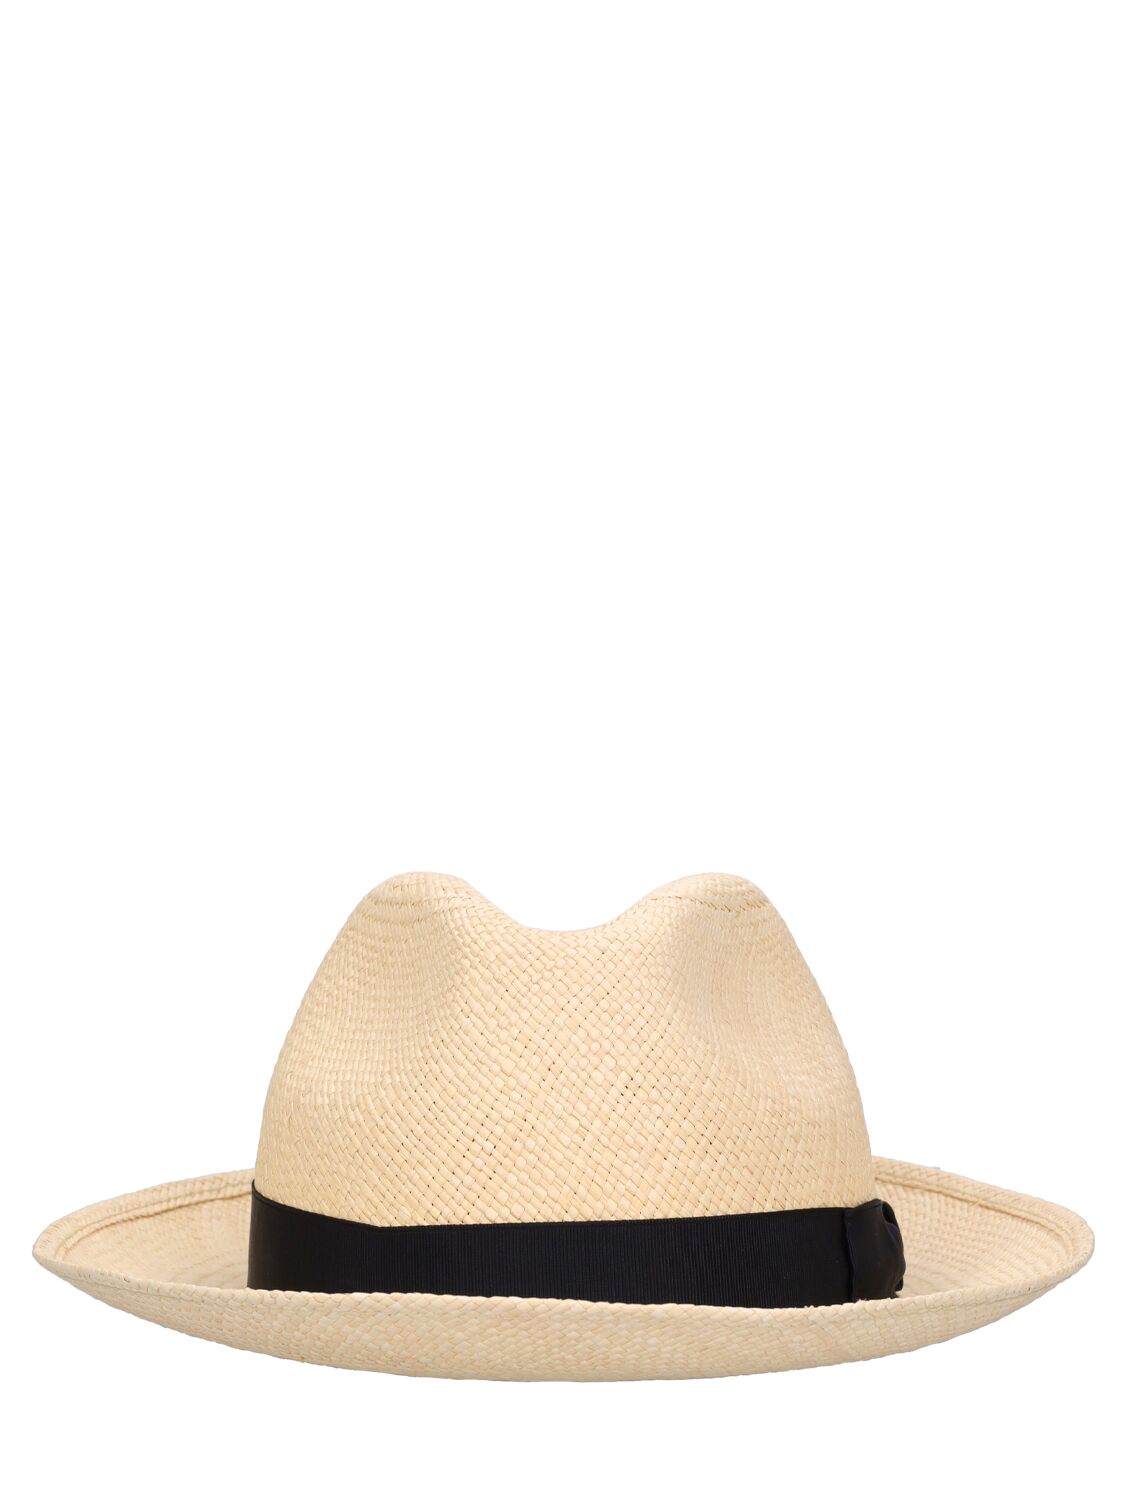 Borsalino Federico Panama Fine Medium Brim In Natural Black Hatband